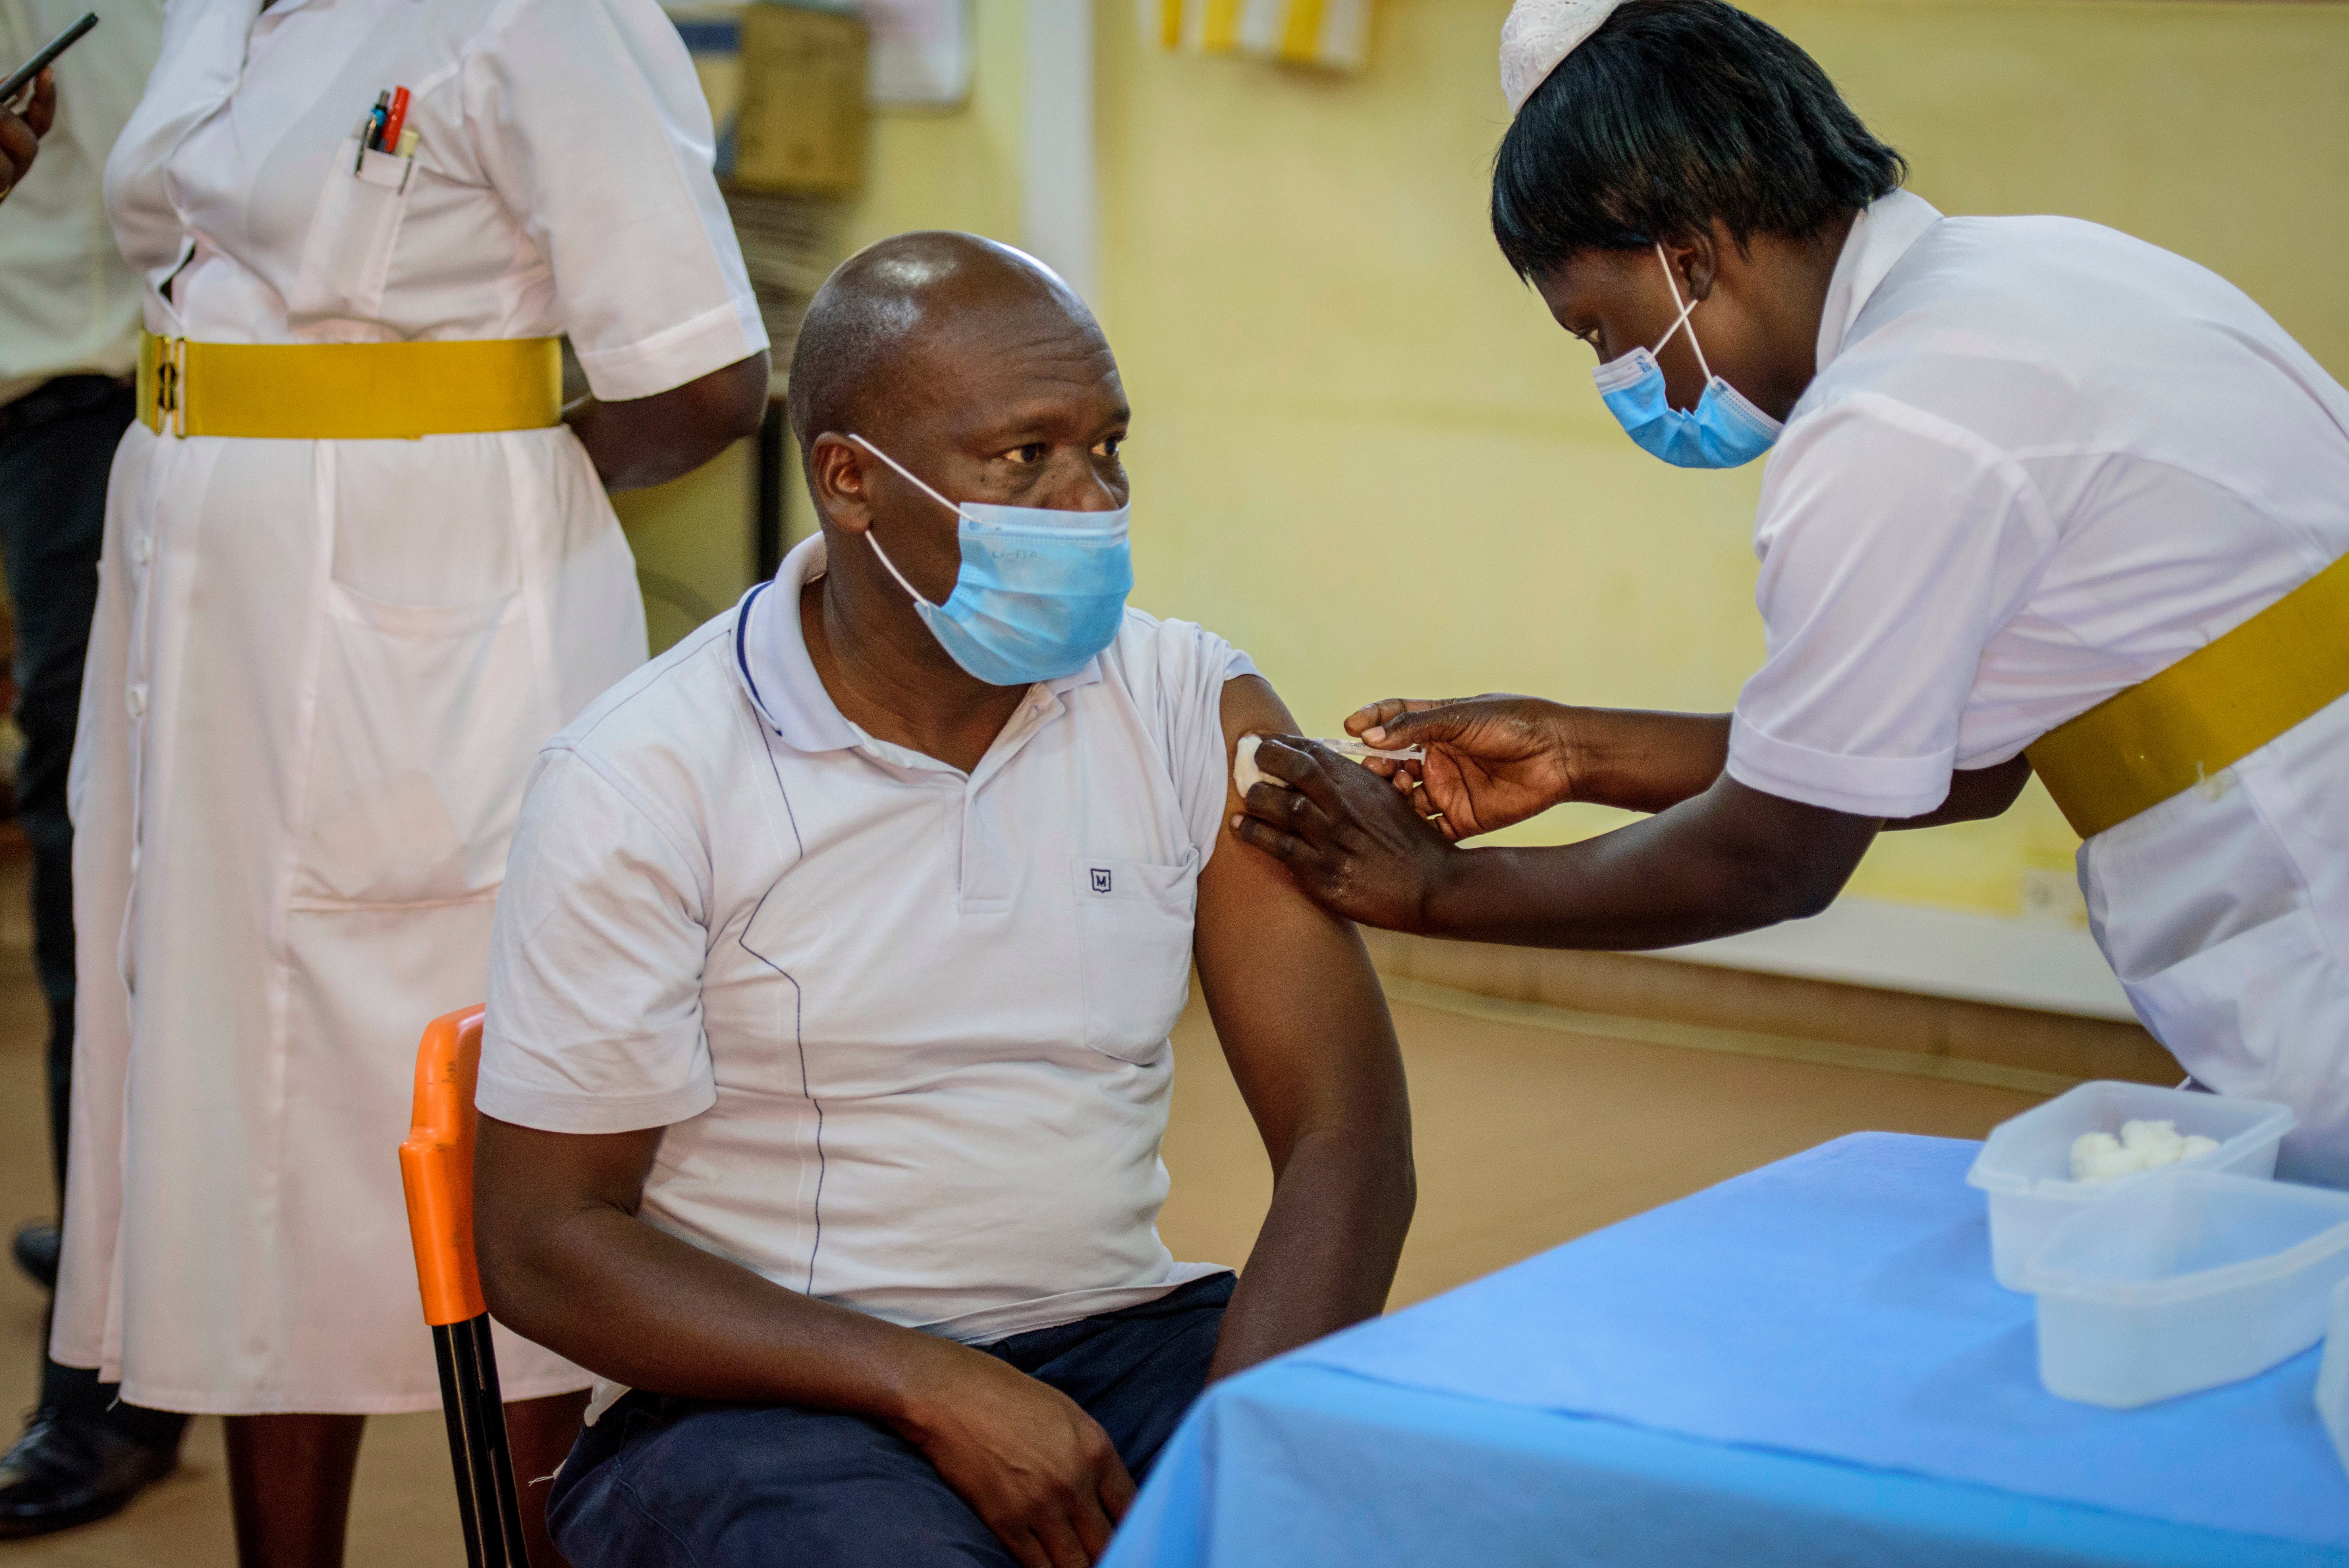 A nurse vaccinates a man against the coronavirus at St. Mary’s Hospital Lacor in Gulu, Uganda